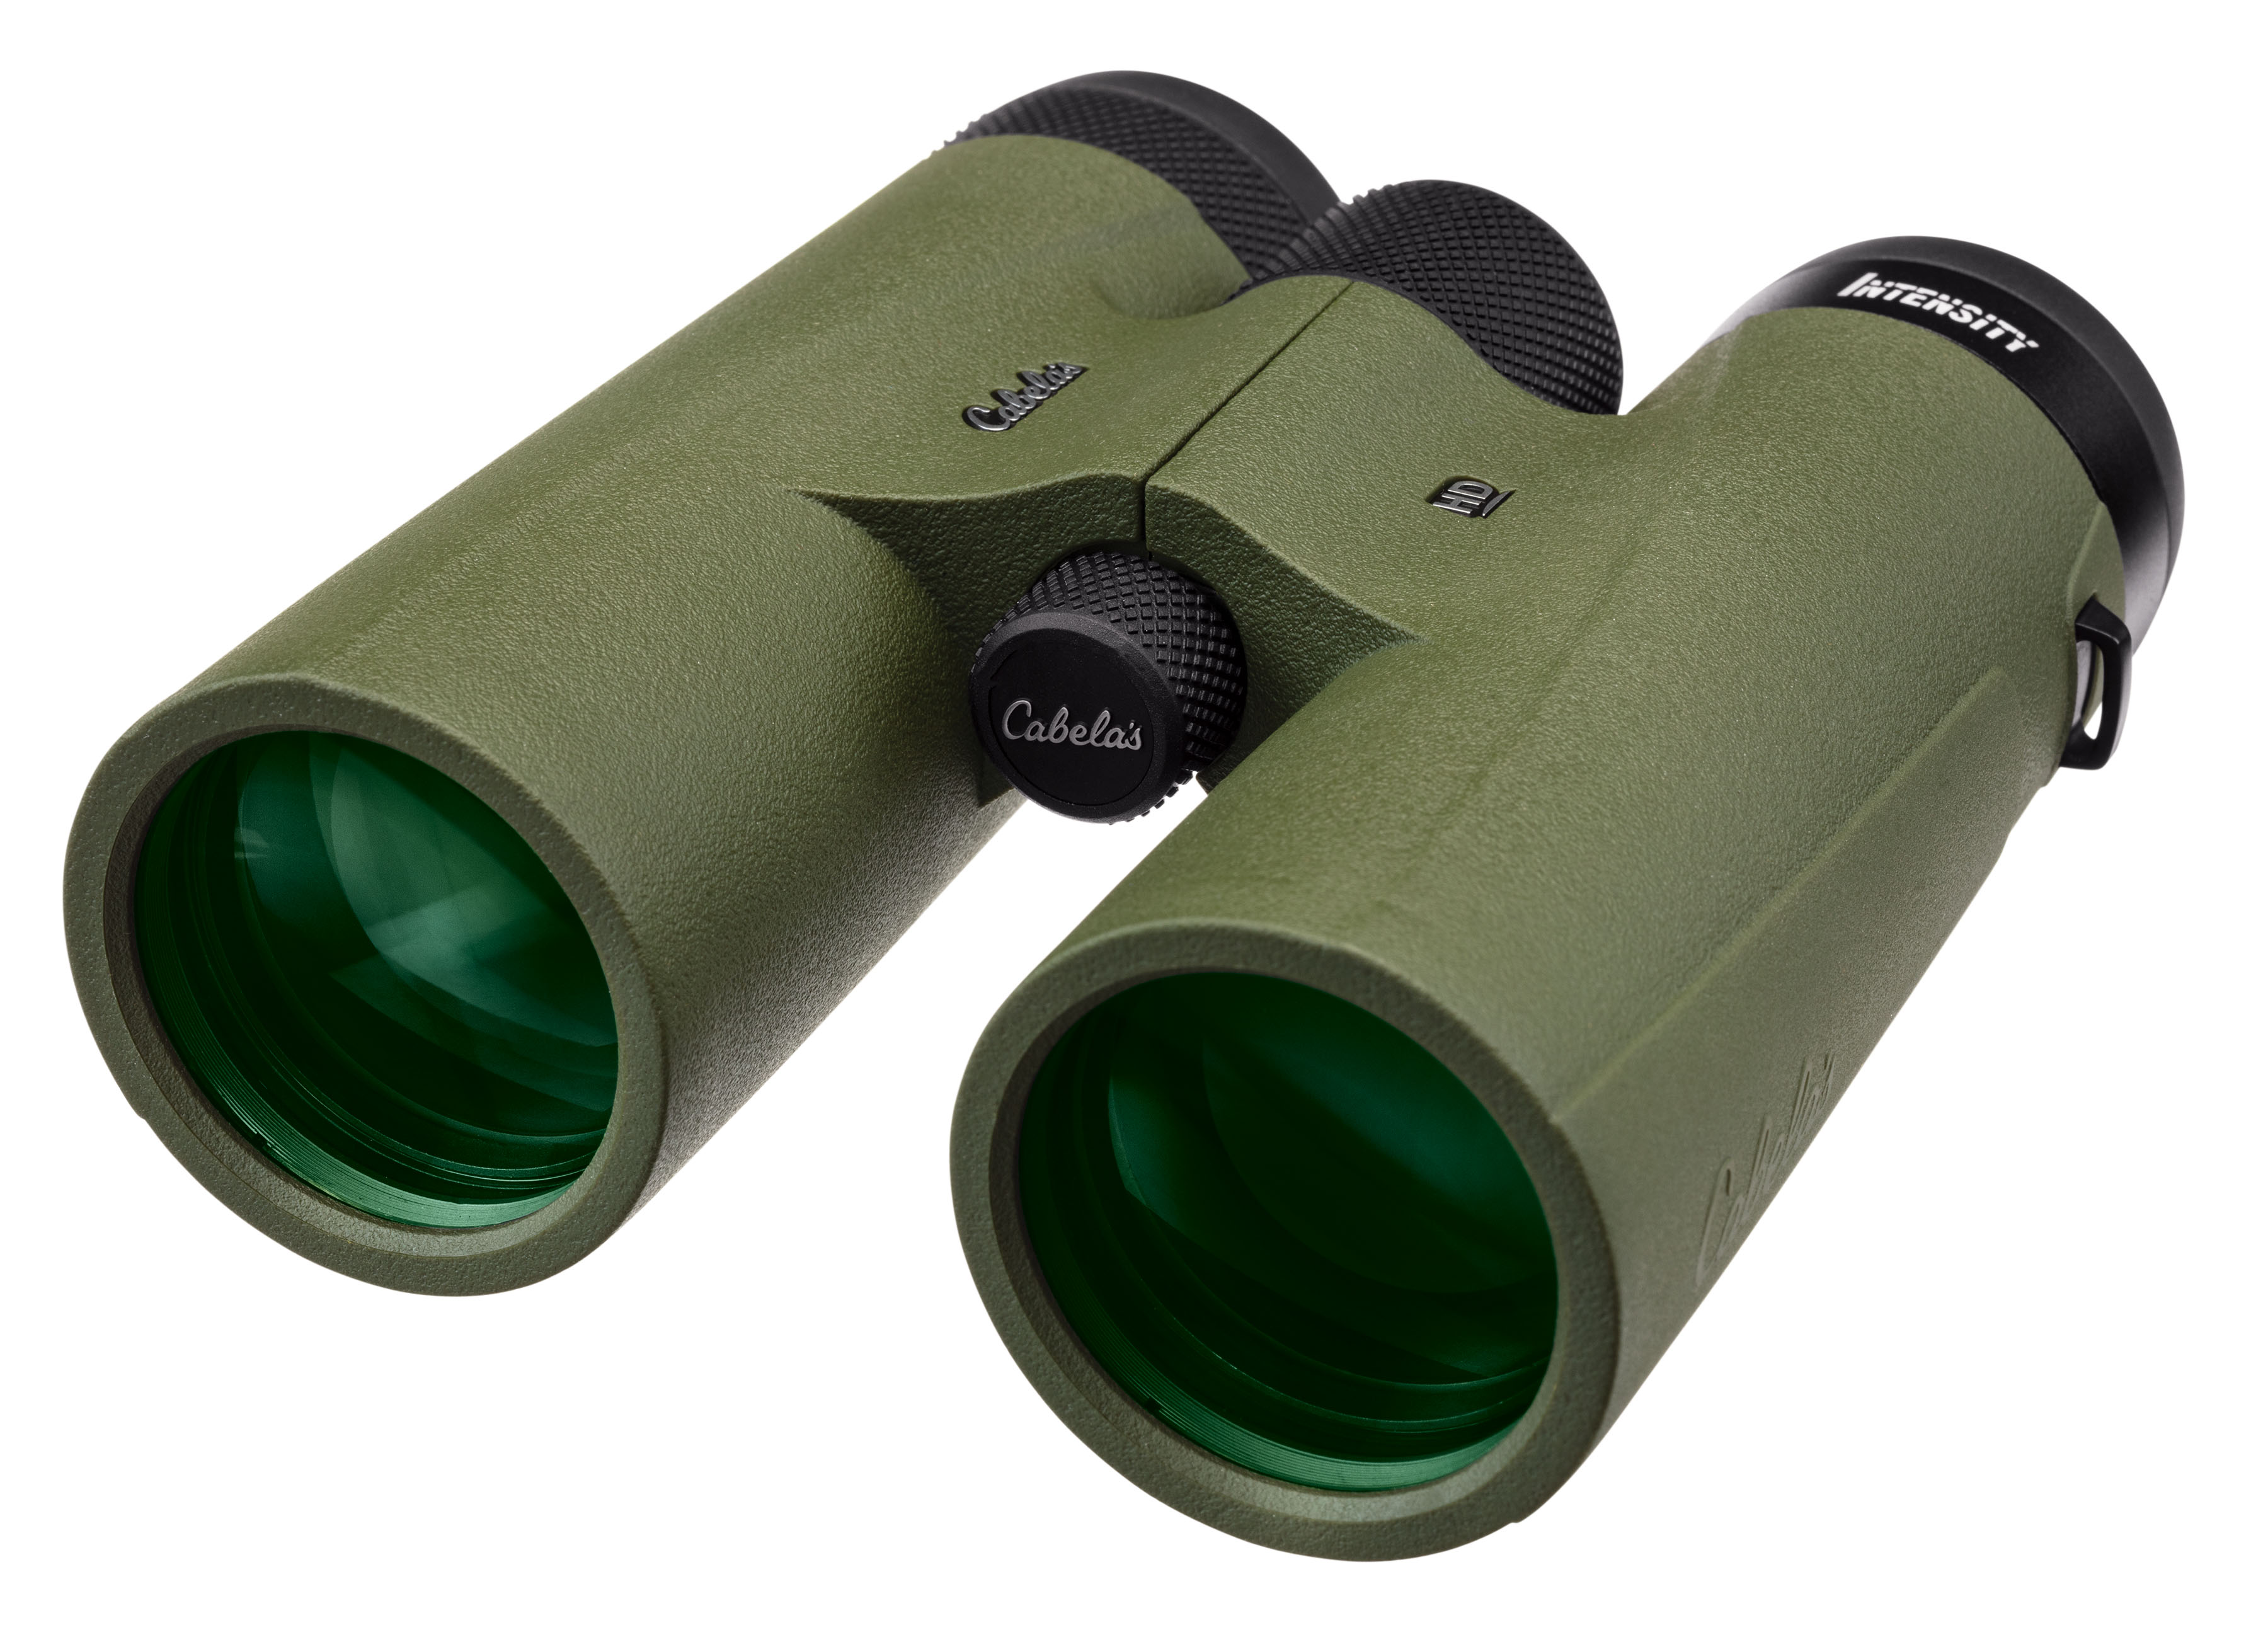 Cabela's Intensity HD Gen 2 Binoculars